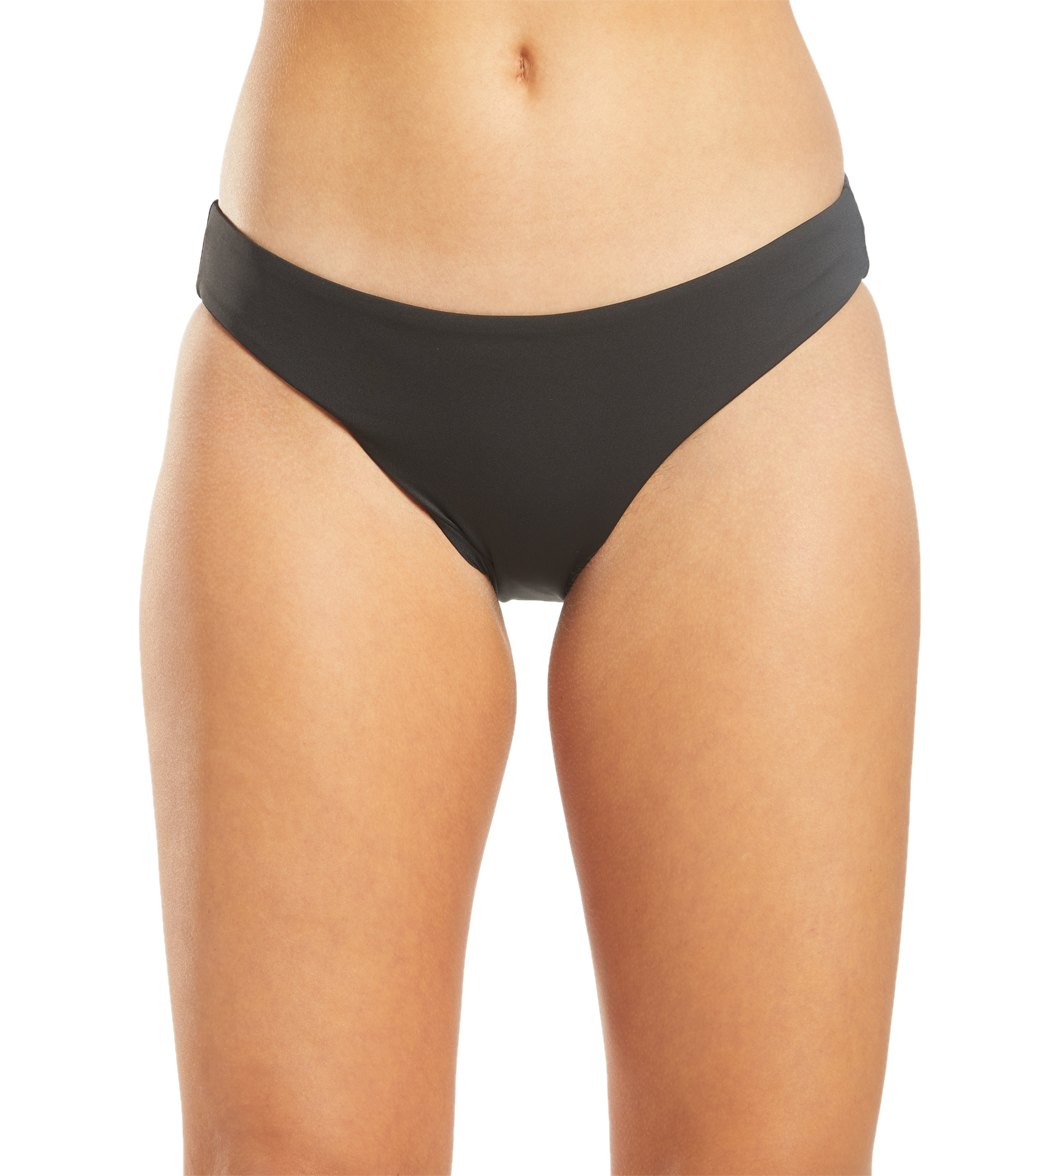 Nike Scoop Bikini Bottom - Black Large - Swimoutlet.com